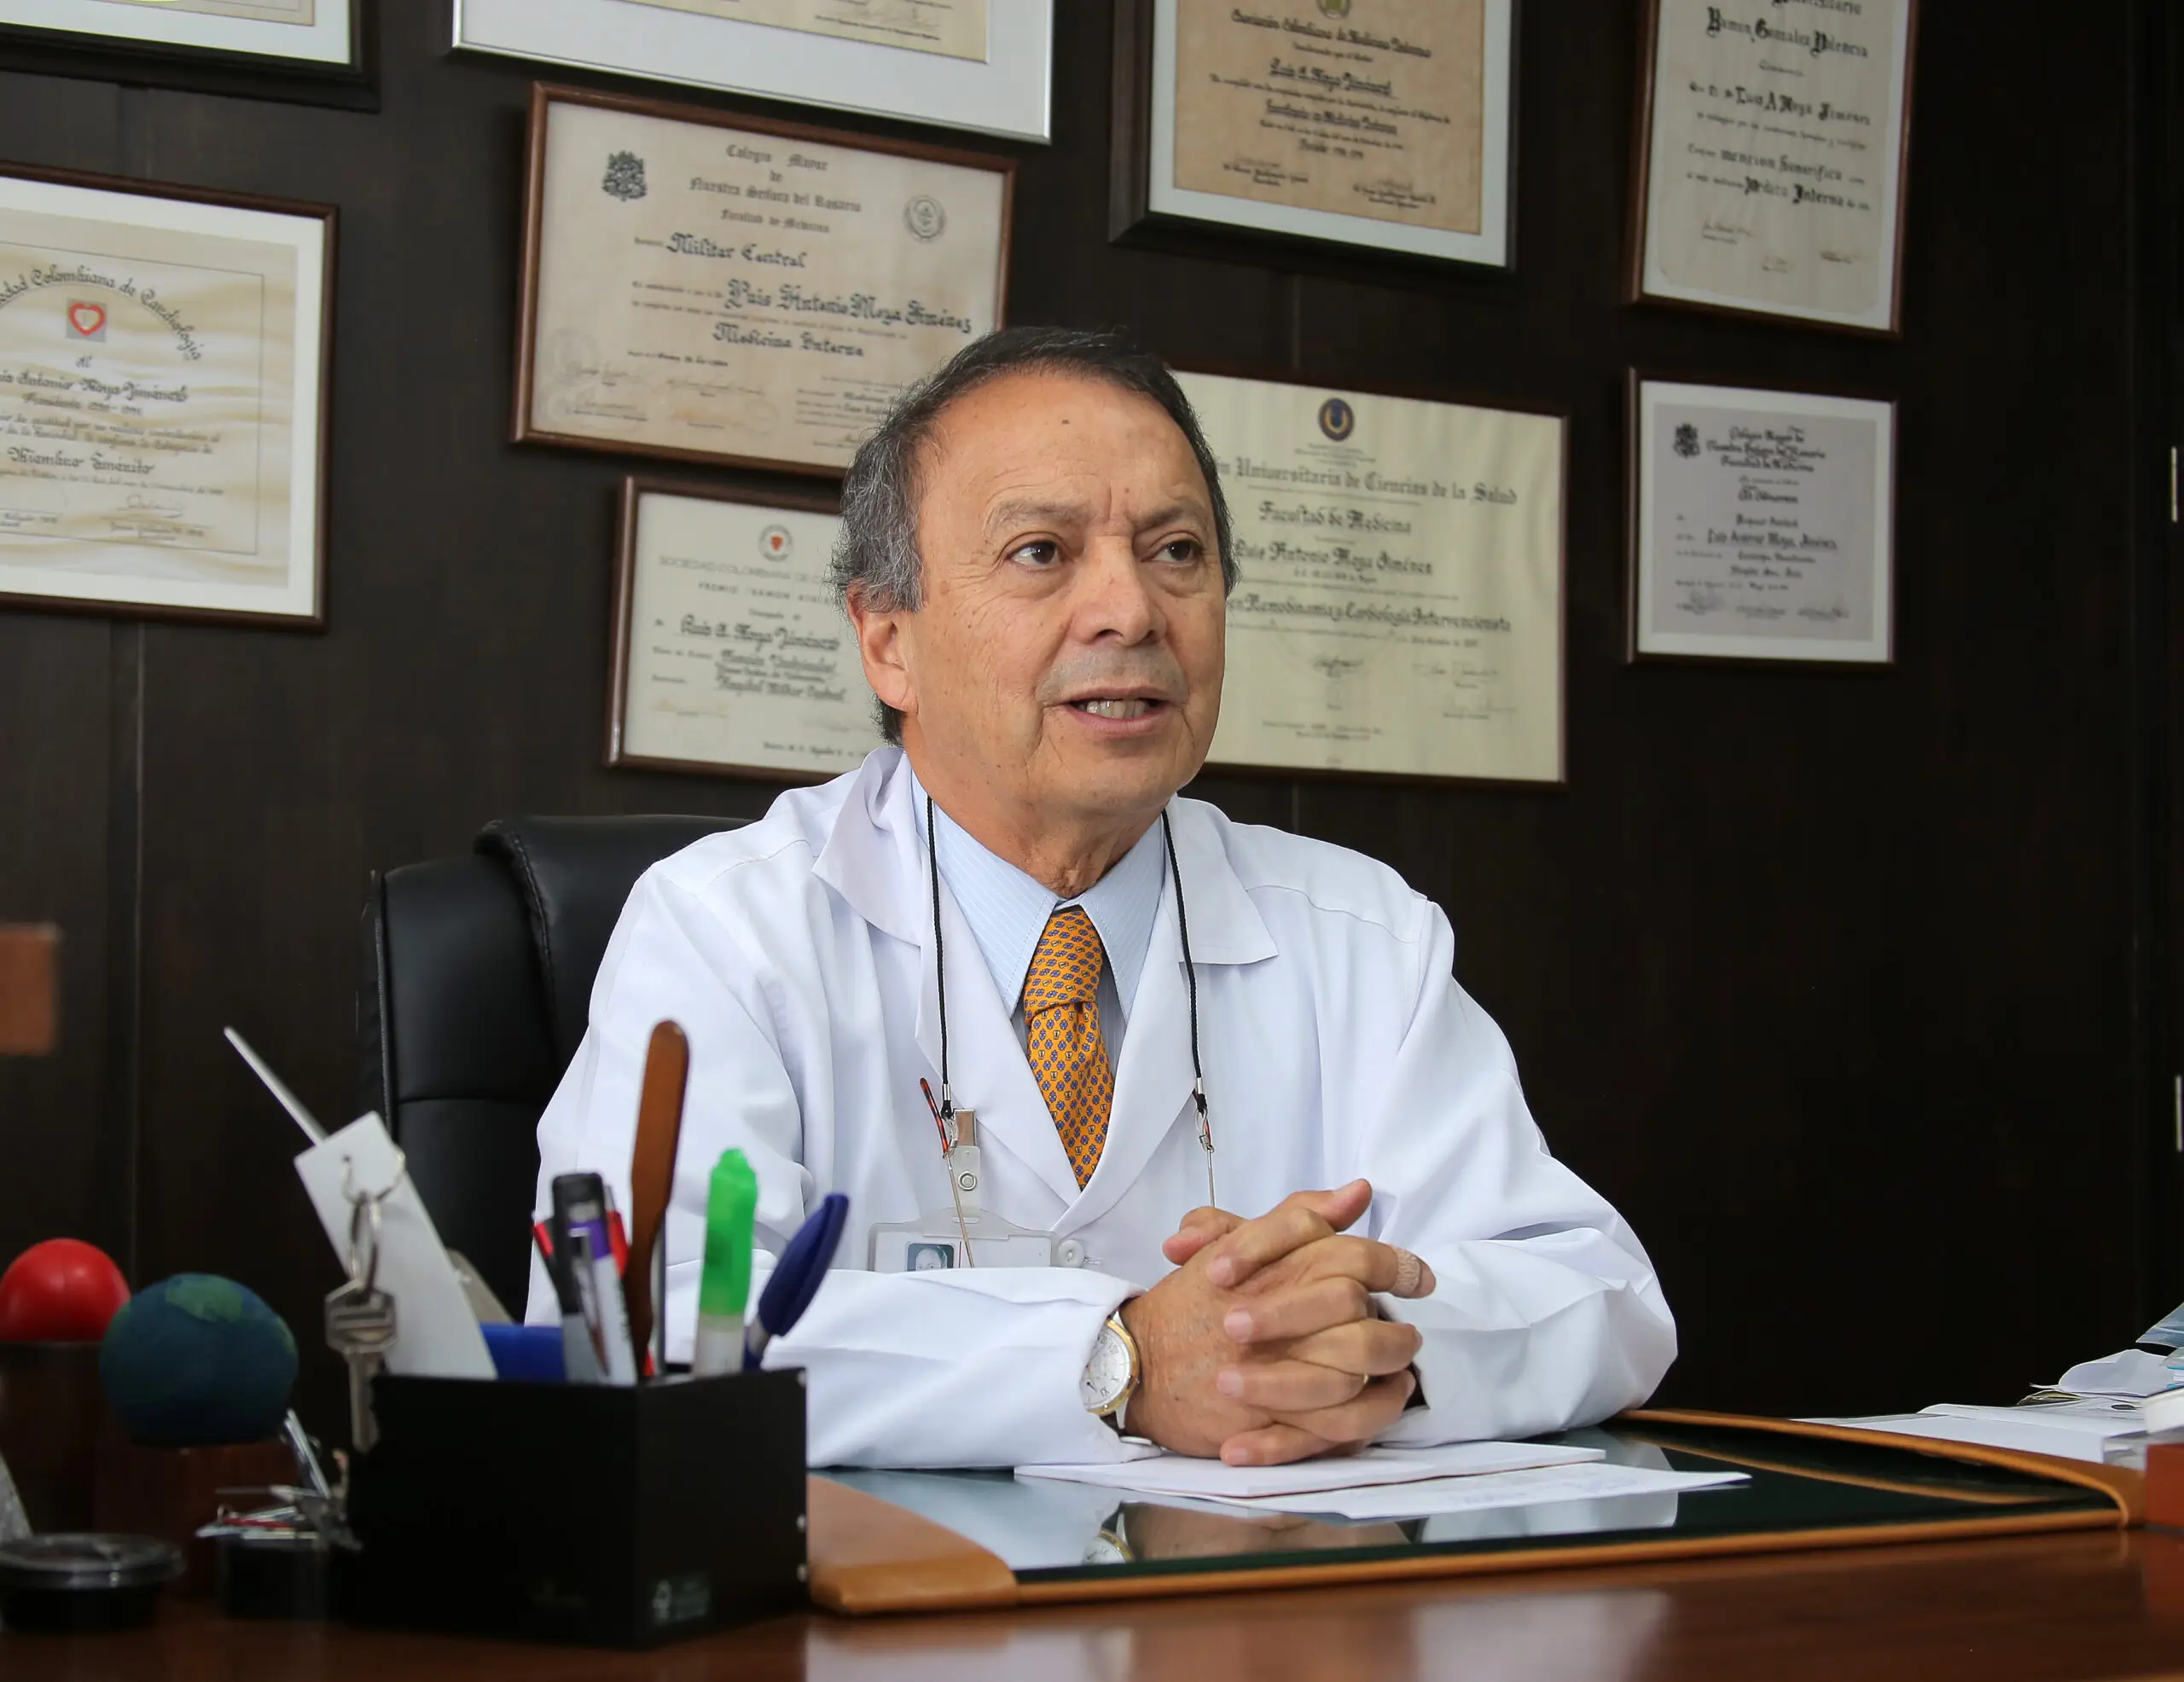 Dr Luis Moya Jiménez